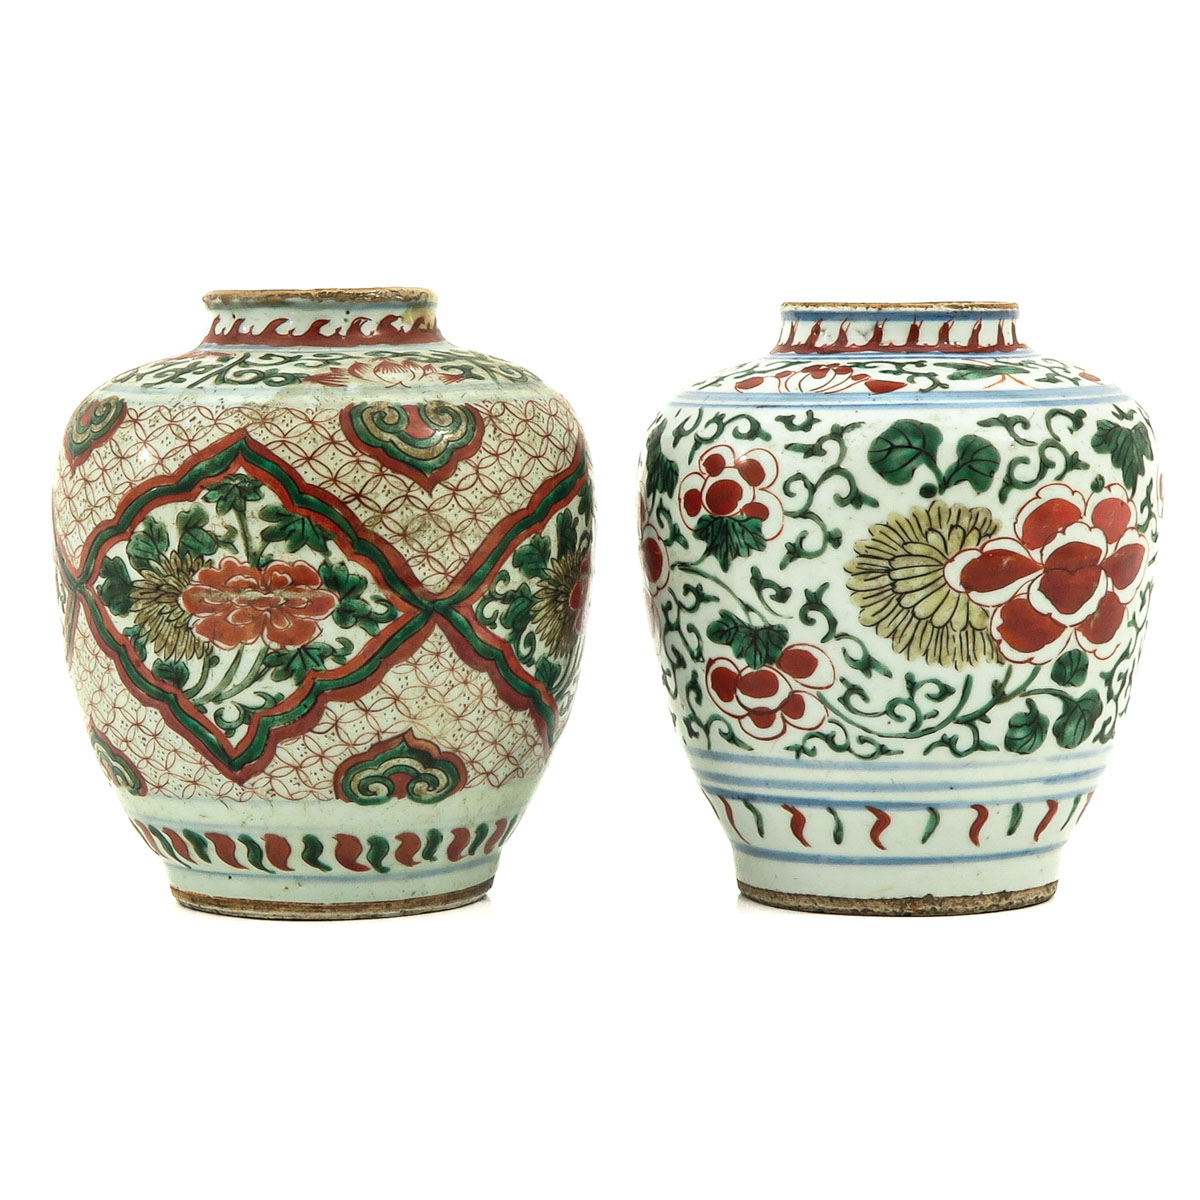 A Lot of 2 Wucai Decor Jars - Image 2 of 10